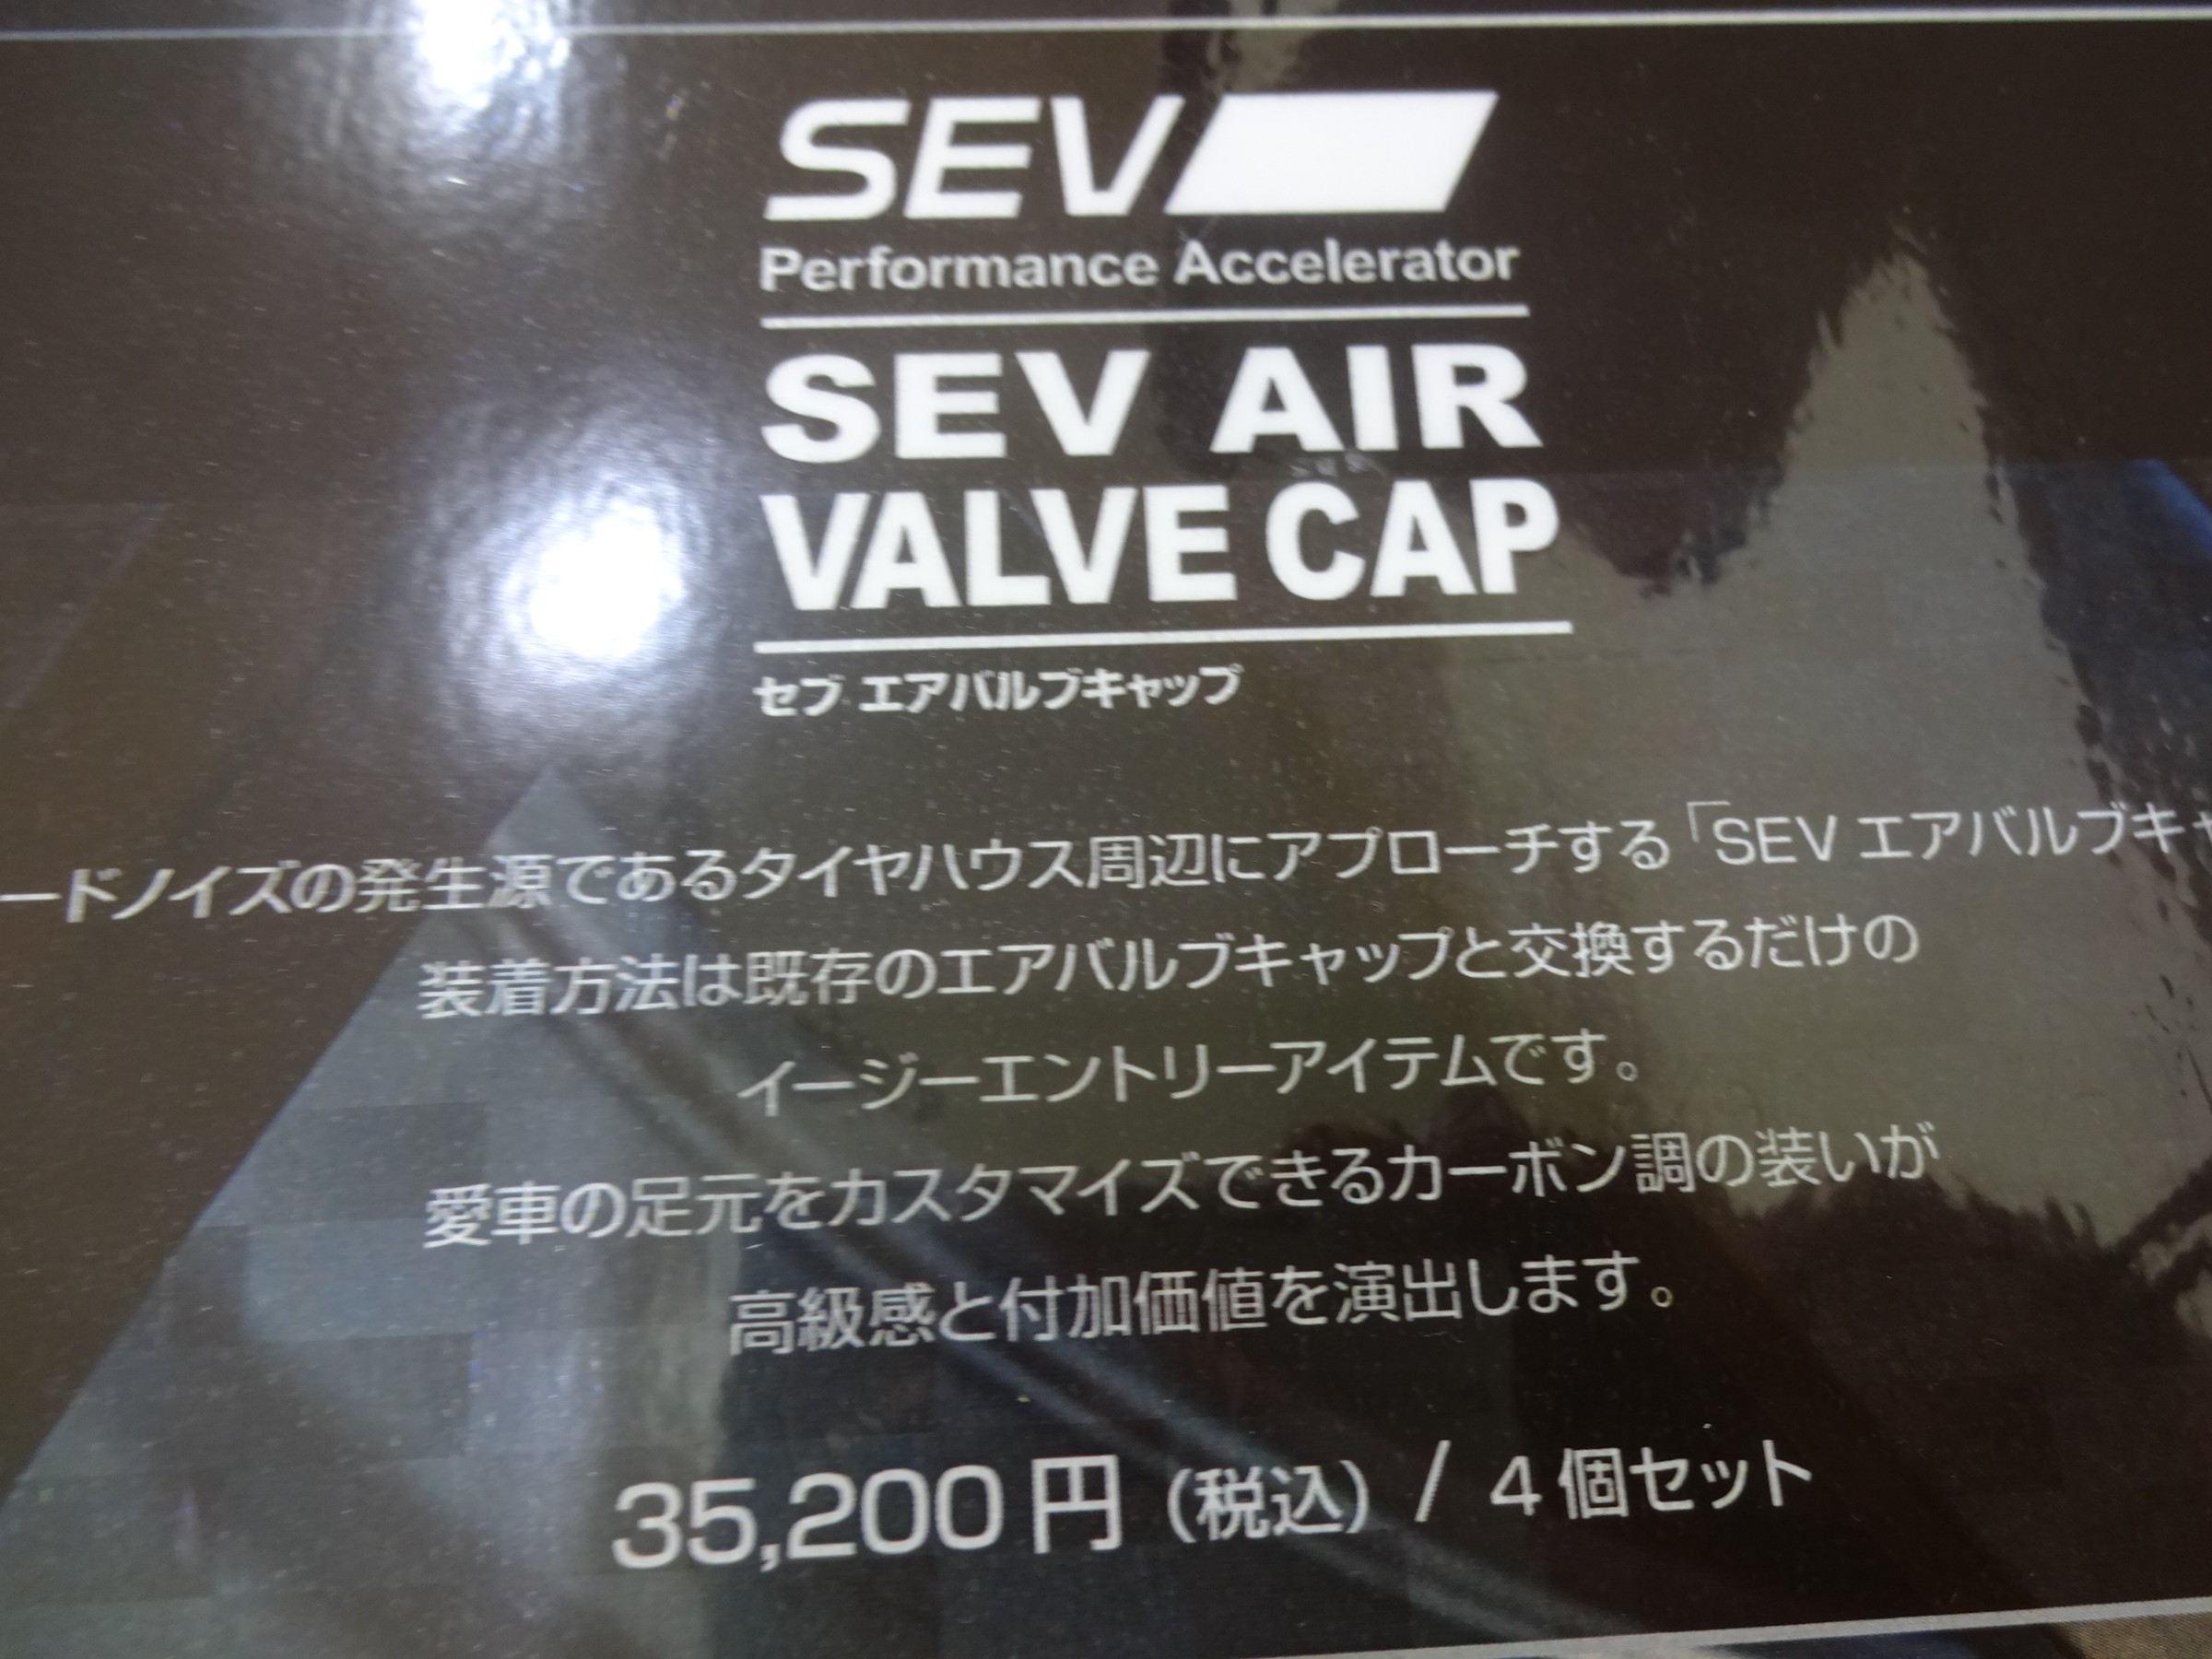 SEV AIR VALVE CAP セブ エアバルブキャップ